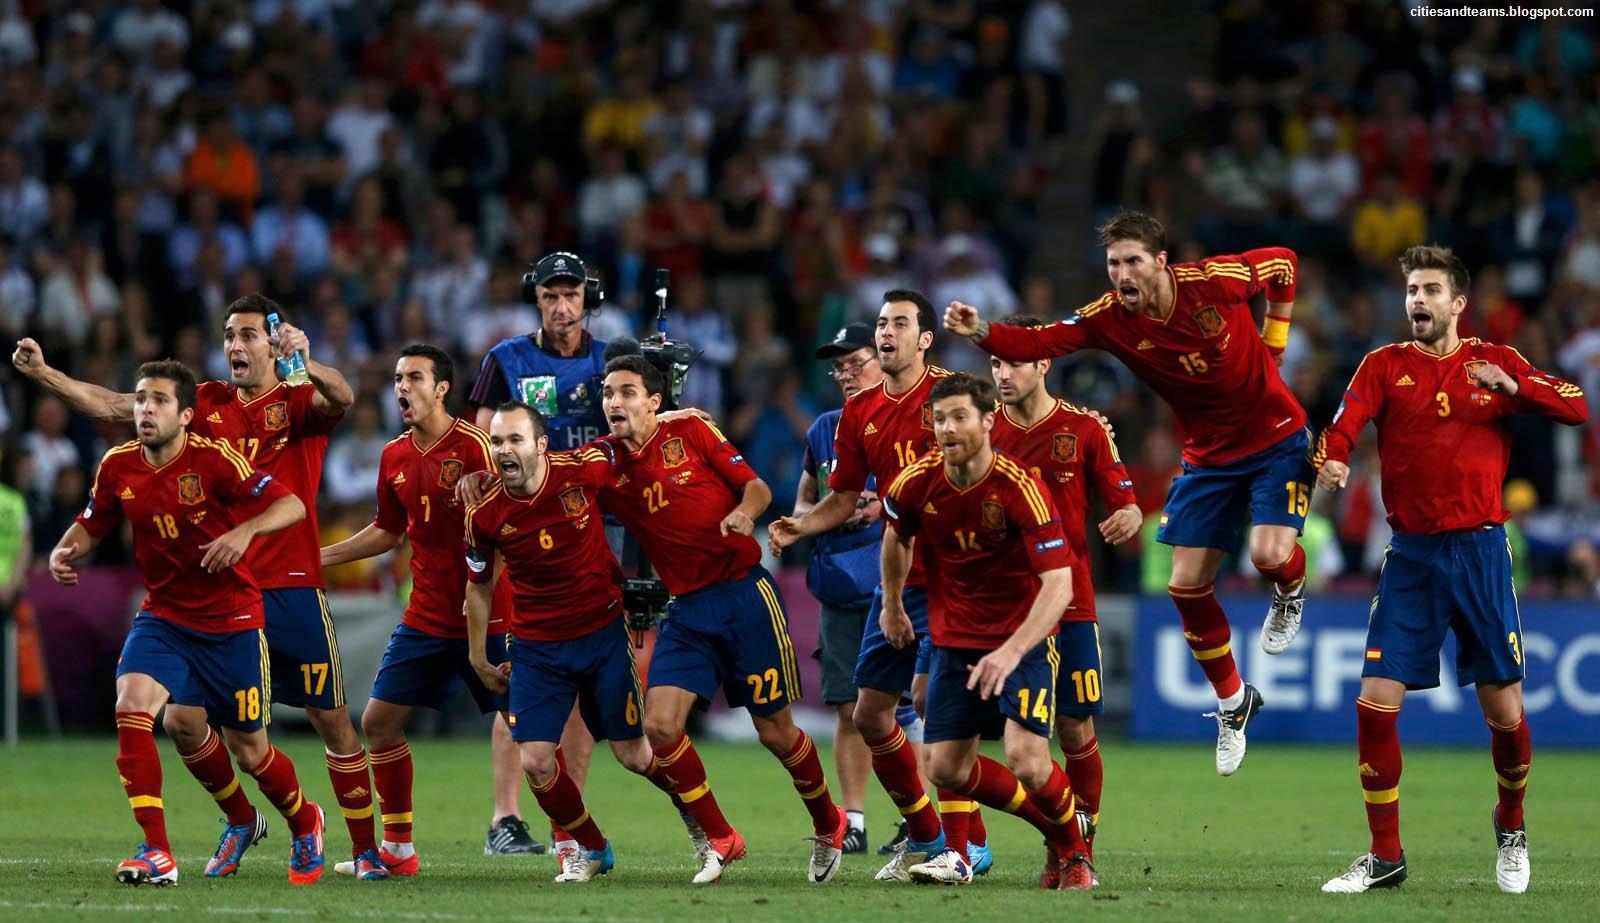 Spain National Team Wallpaper. Best Games